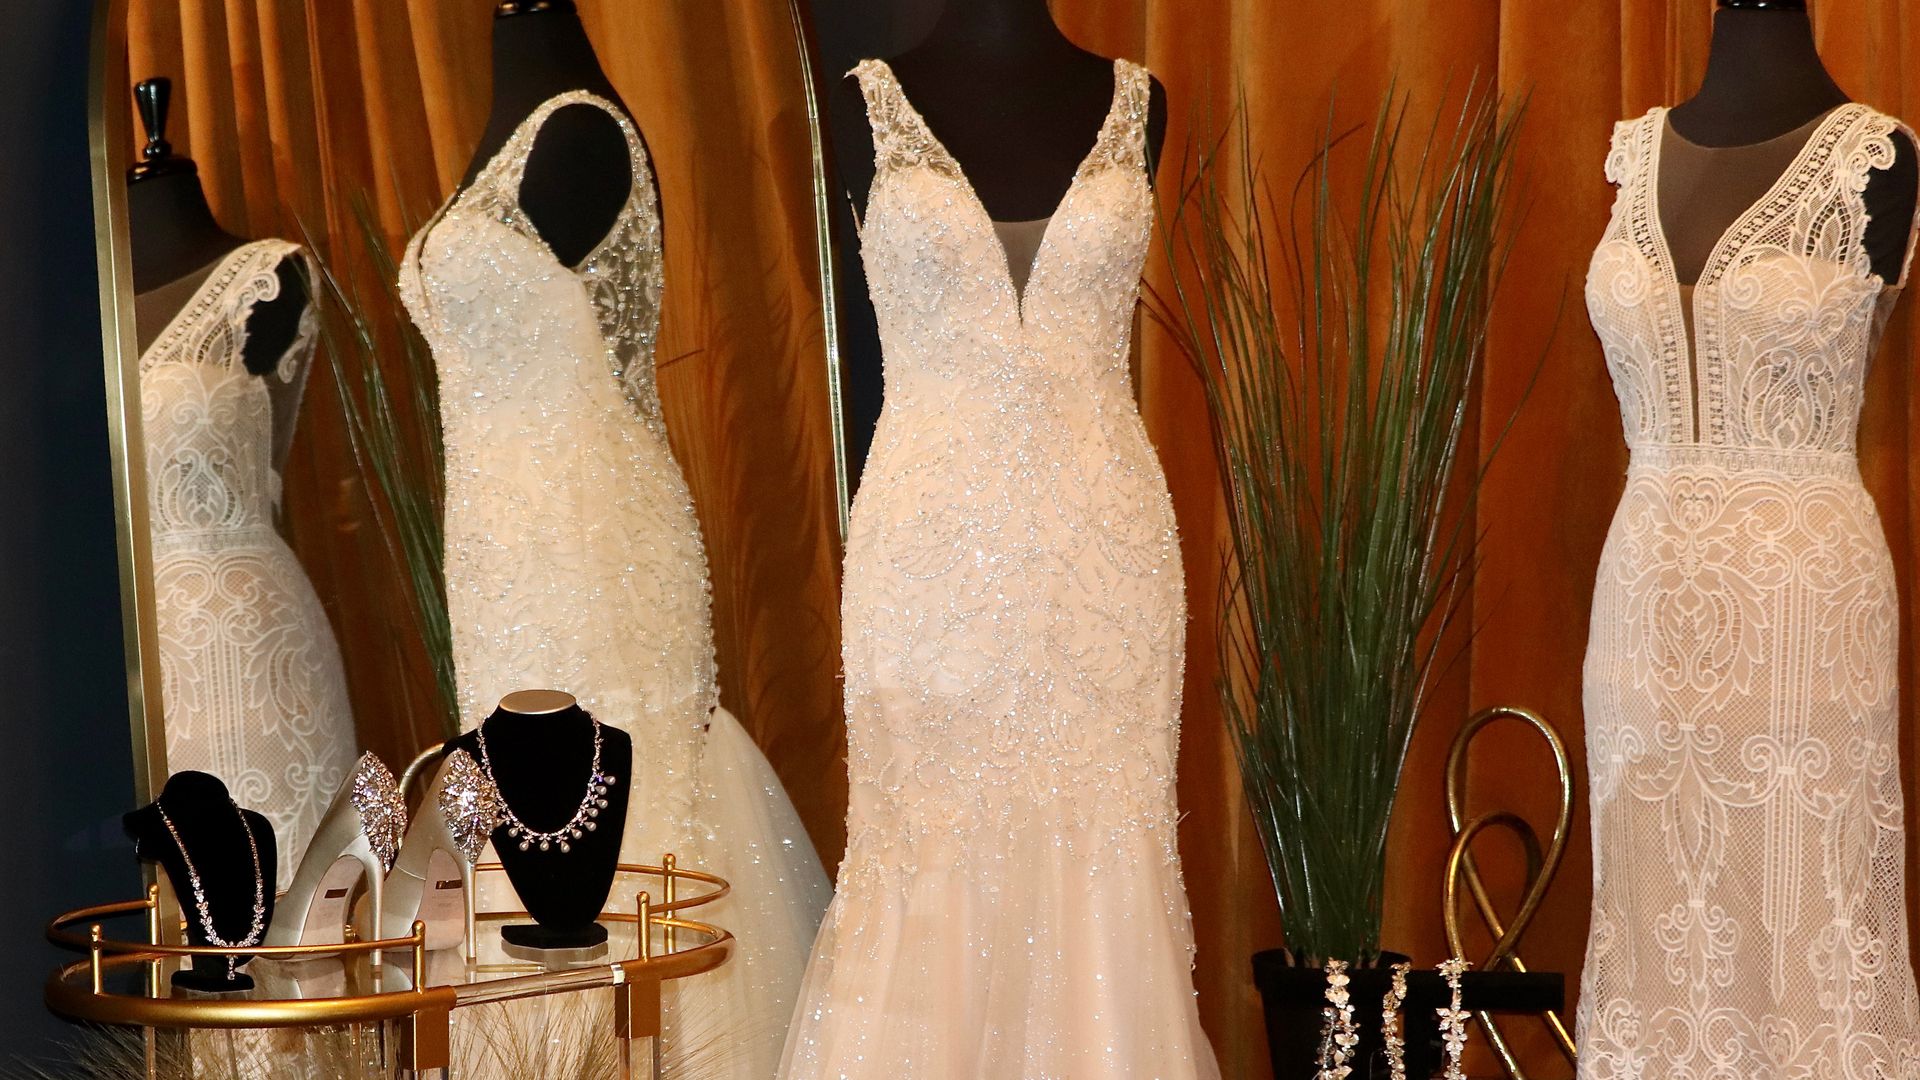 Wedding dresses hang on mannequins in a showroom.